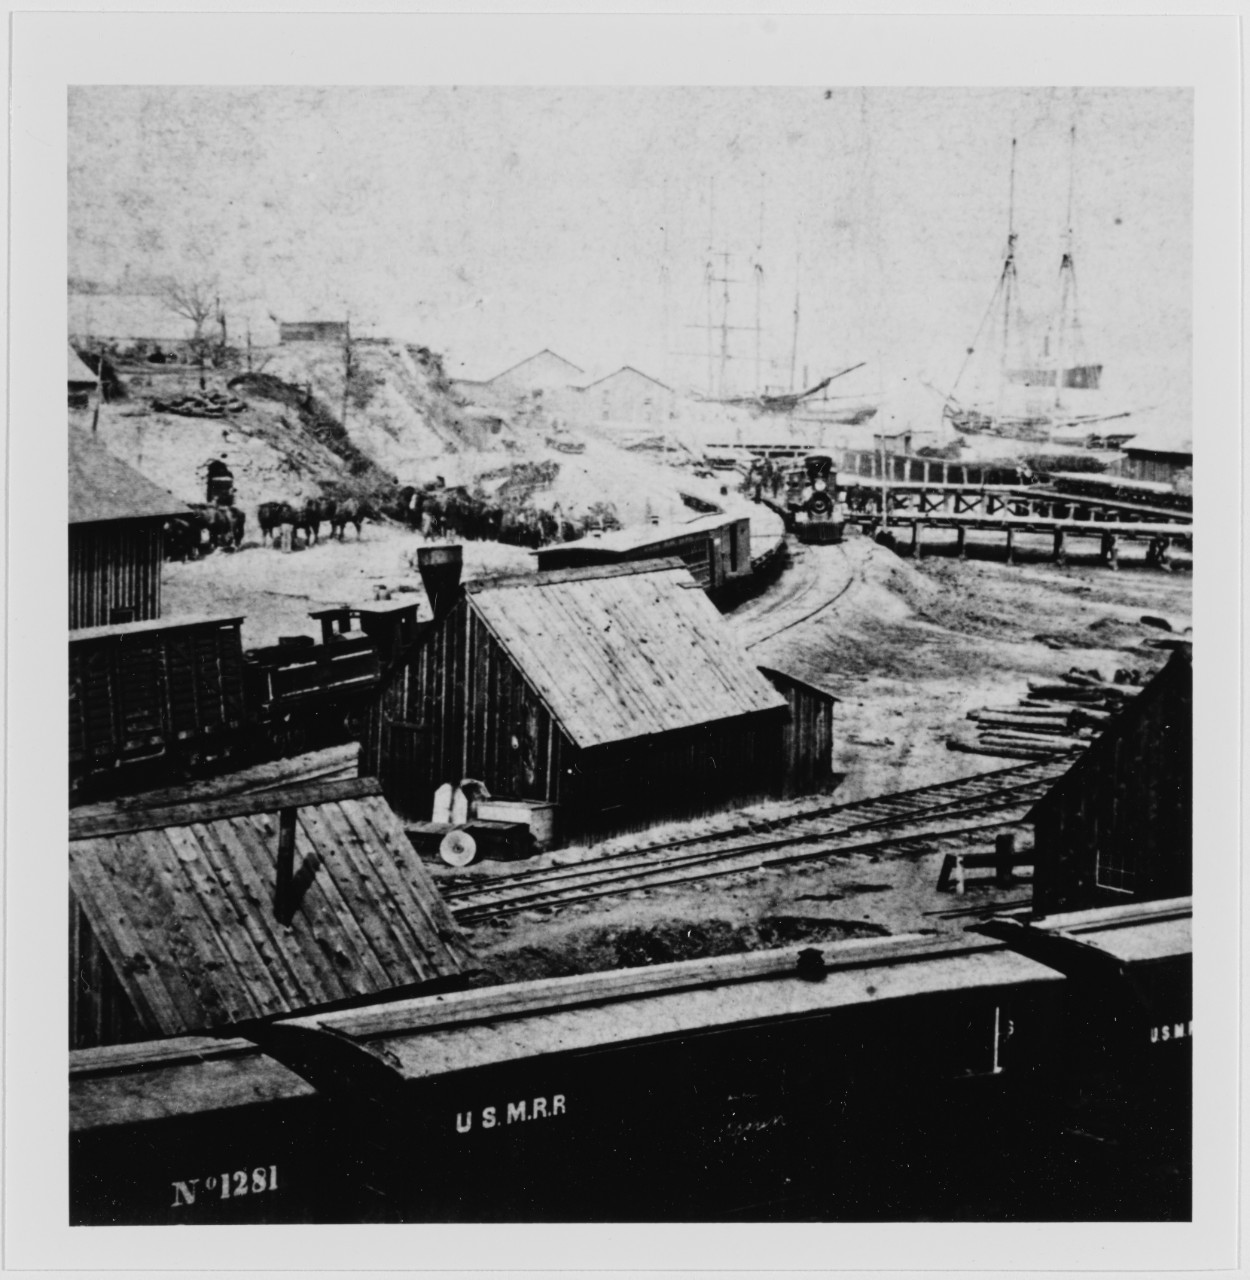 Rail Road at City Point, Virginia, Looking North, photographed circa 1864-1865